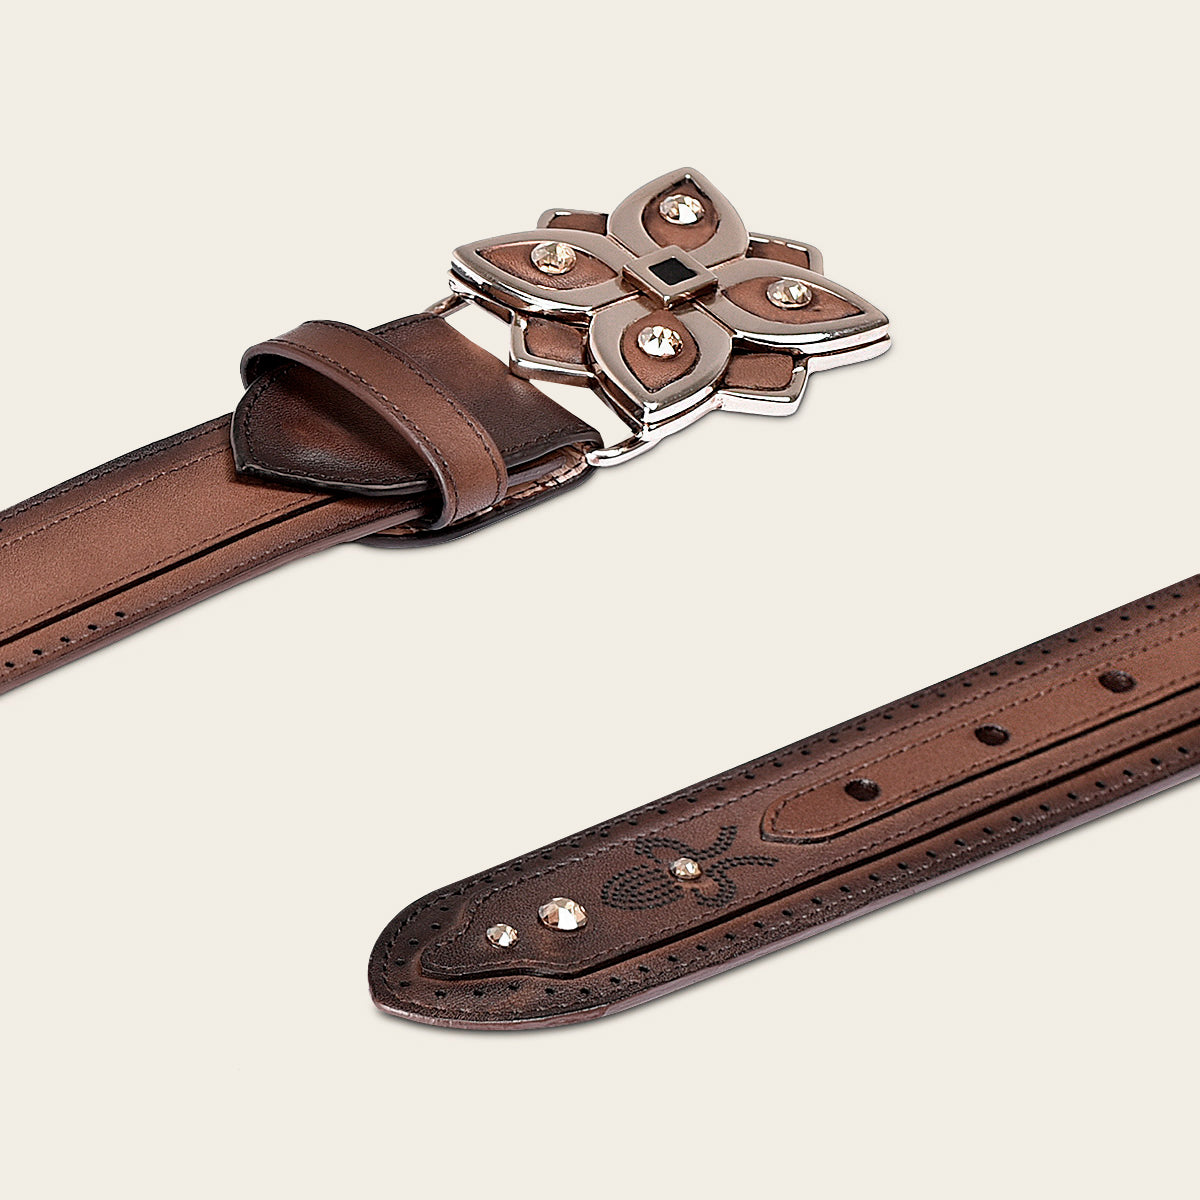 Handwoven brown leather minimalist belt